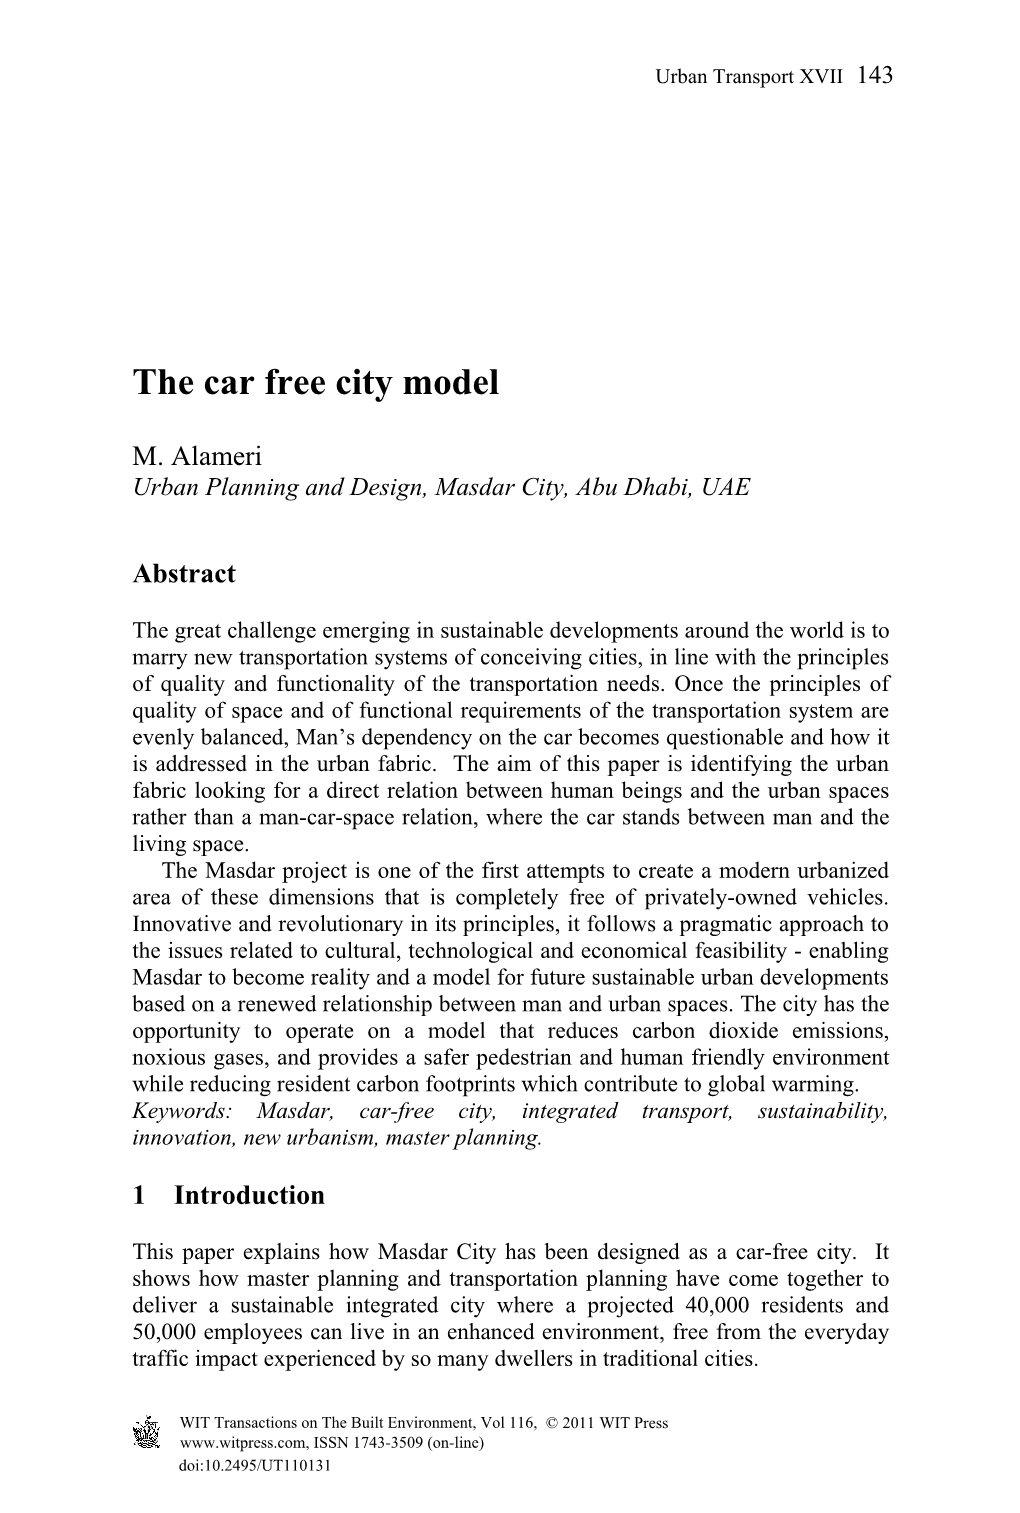 The Car Free City Model